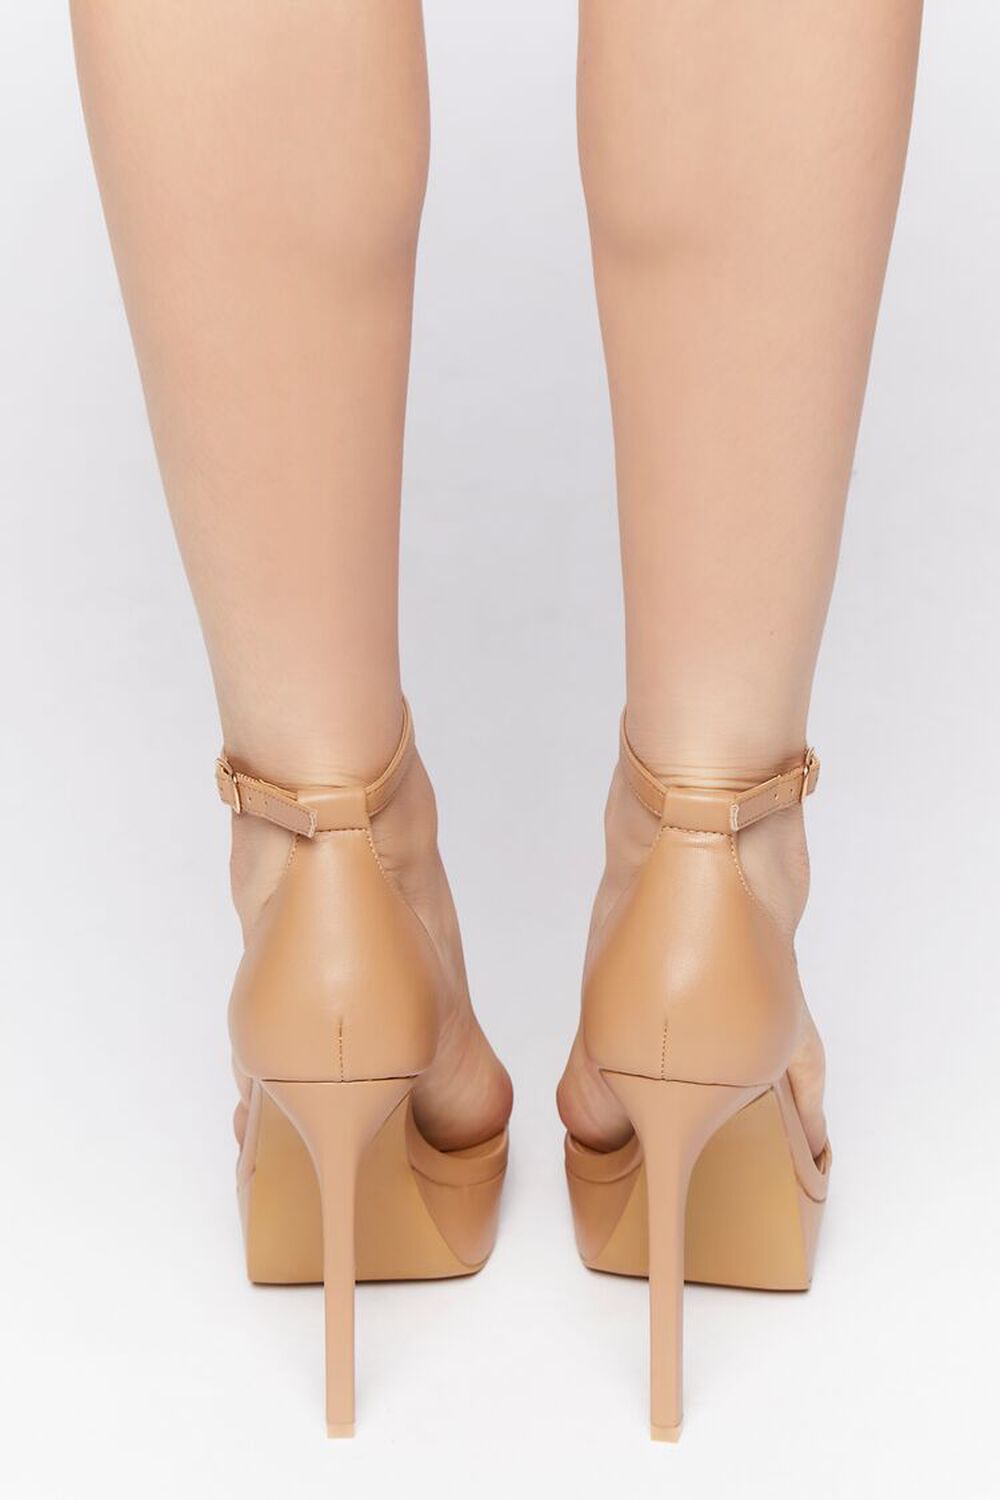 NUDE Open-Toe Platform Stiletto Heels, image 3